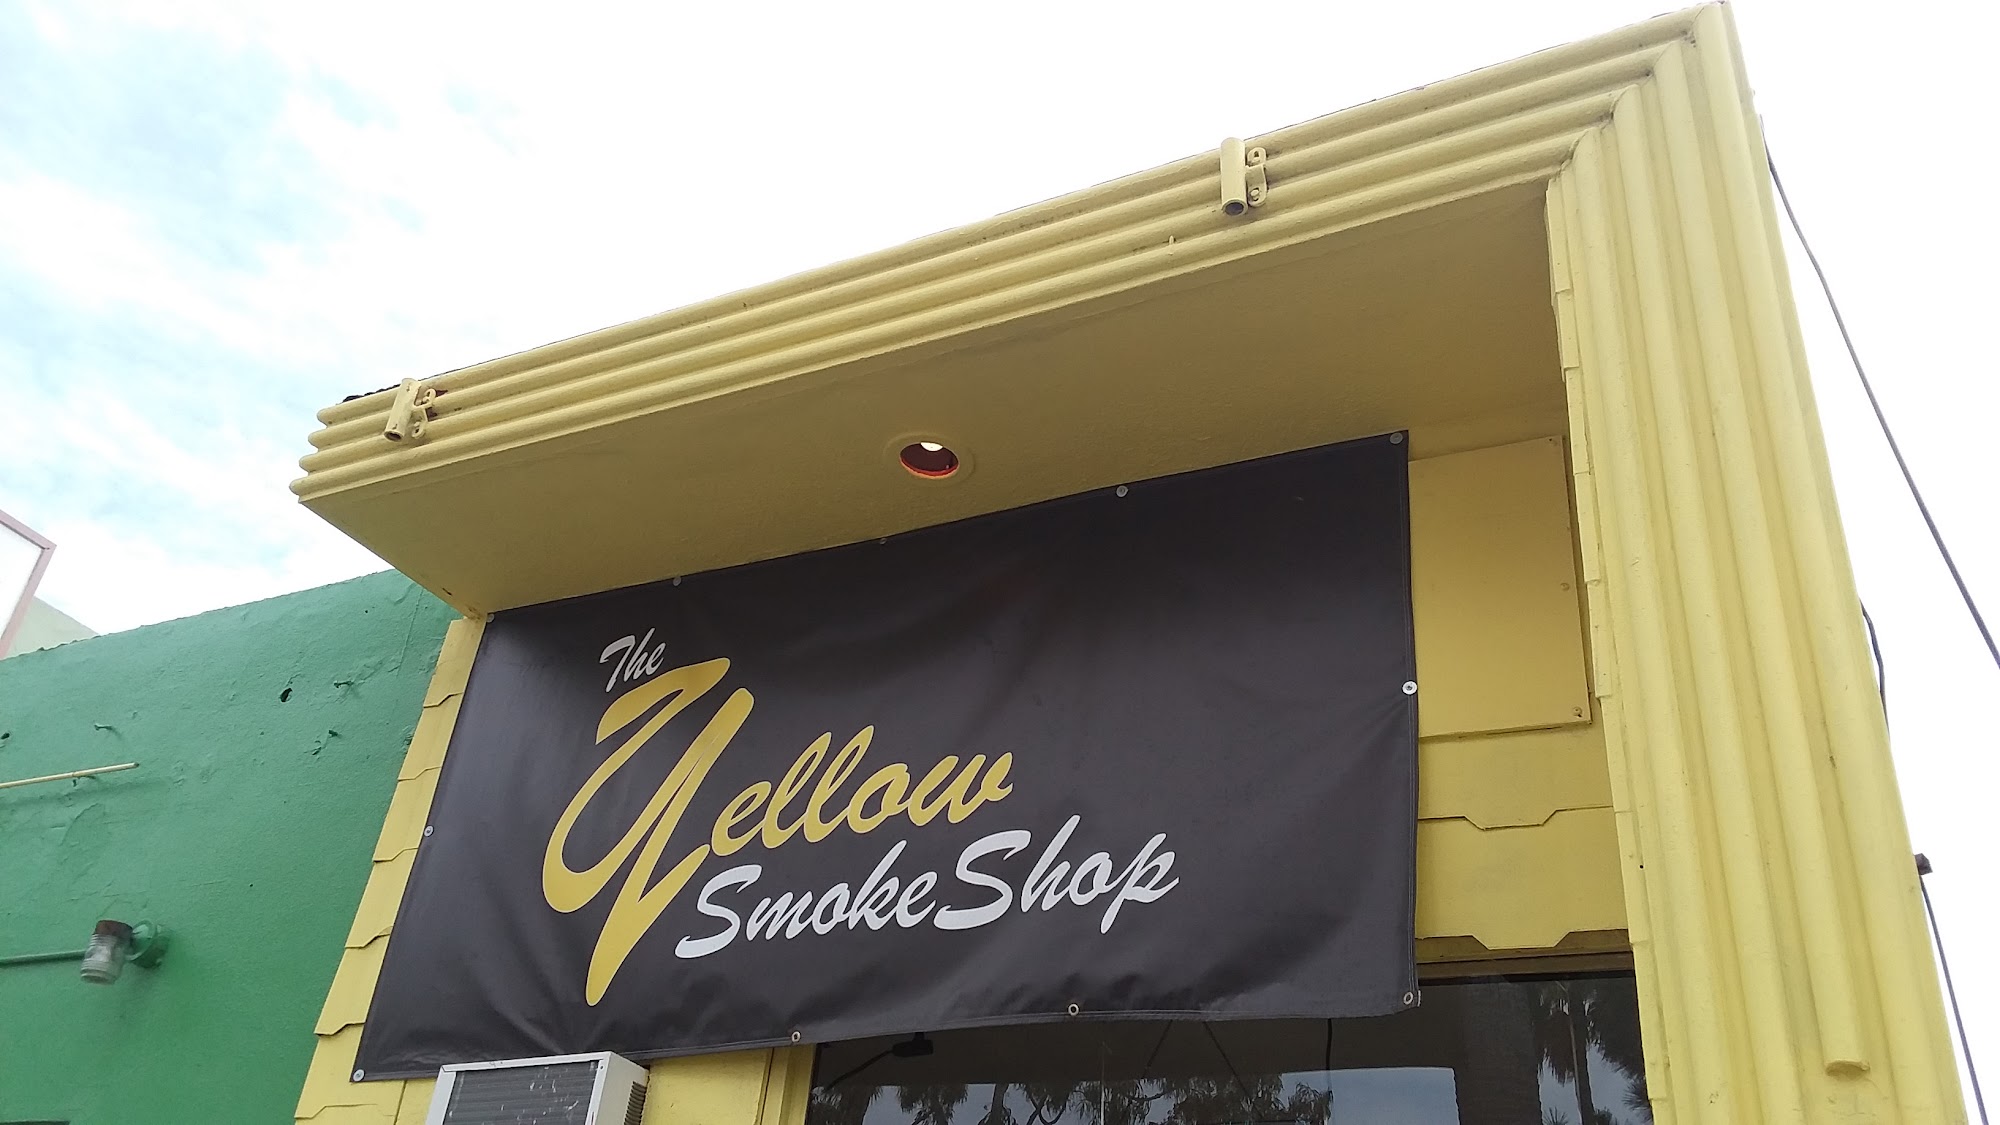 The Yellow Smoke Shop